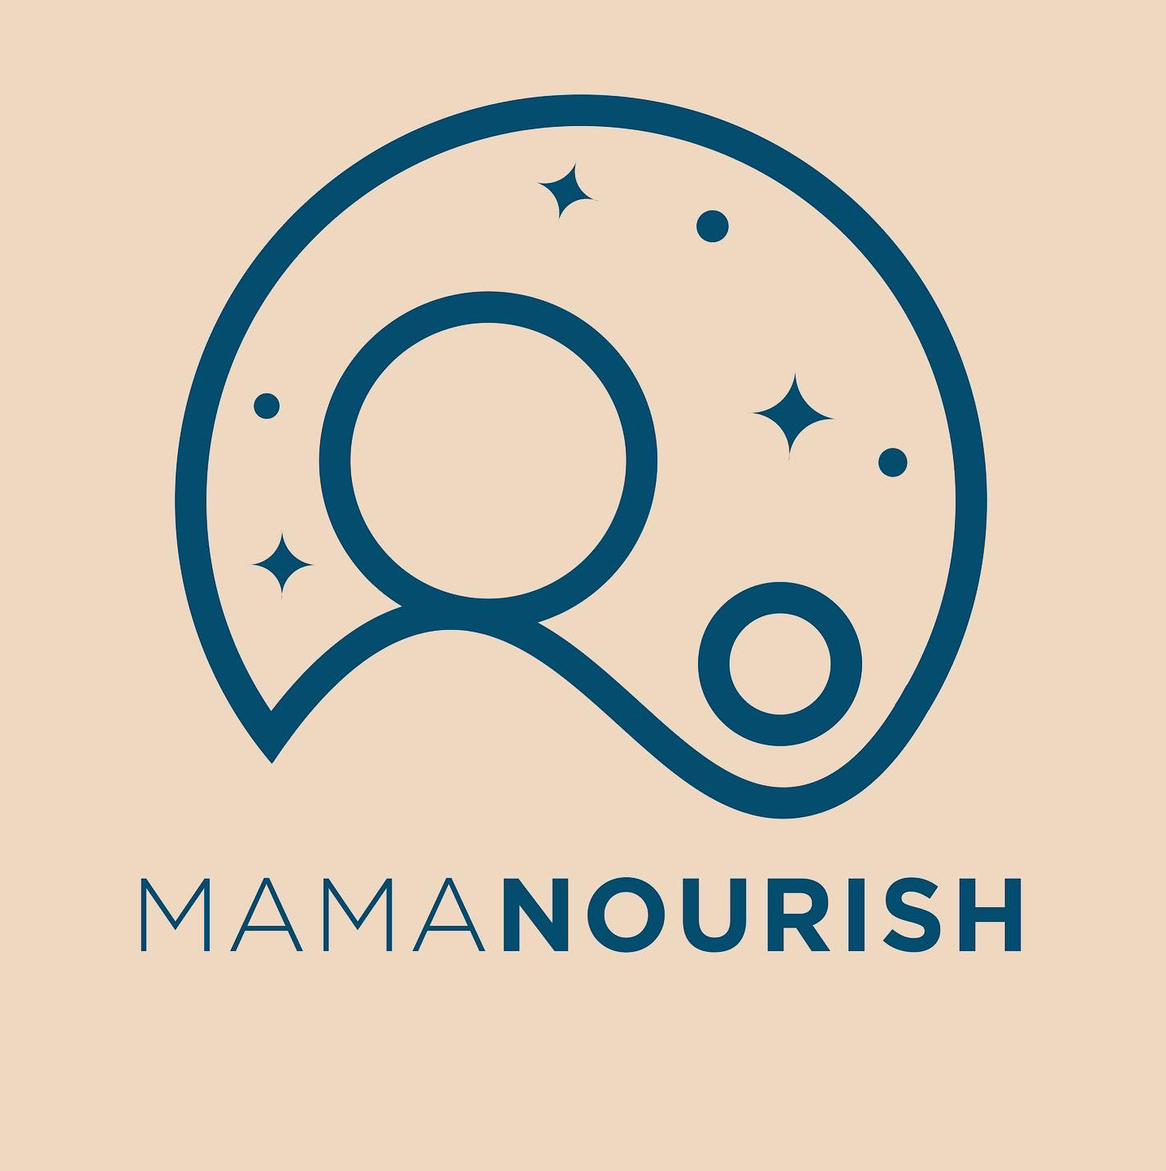 MamaNourish's images